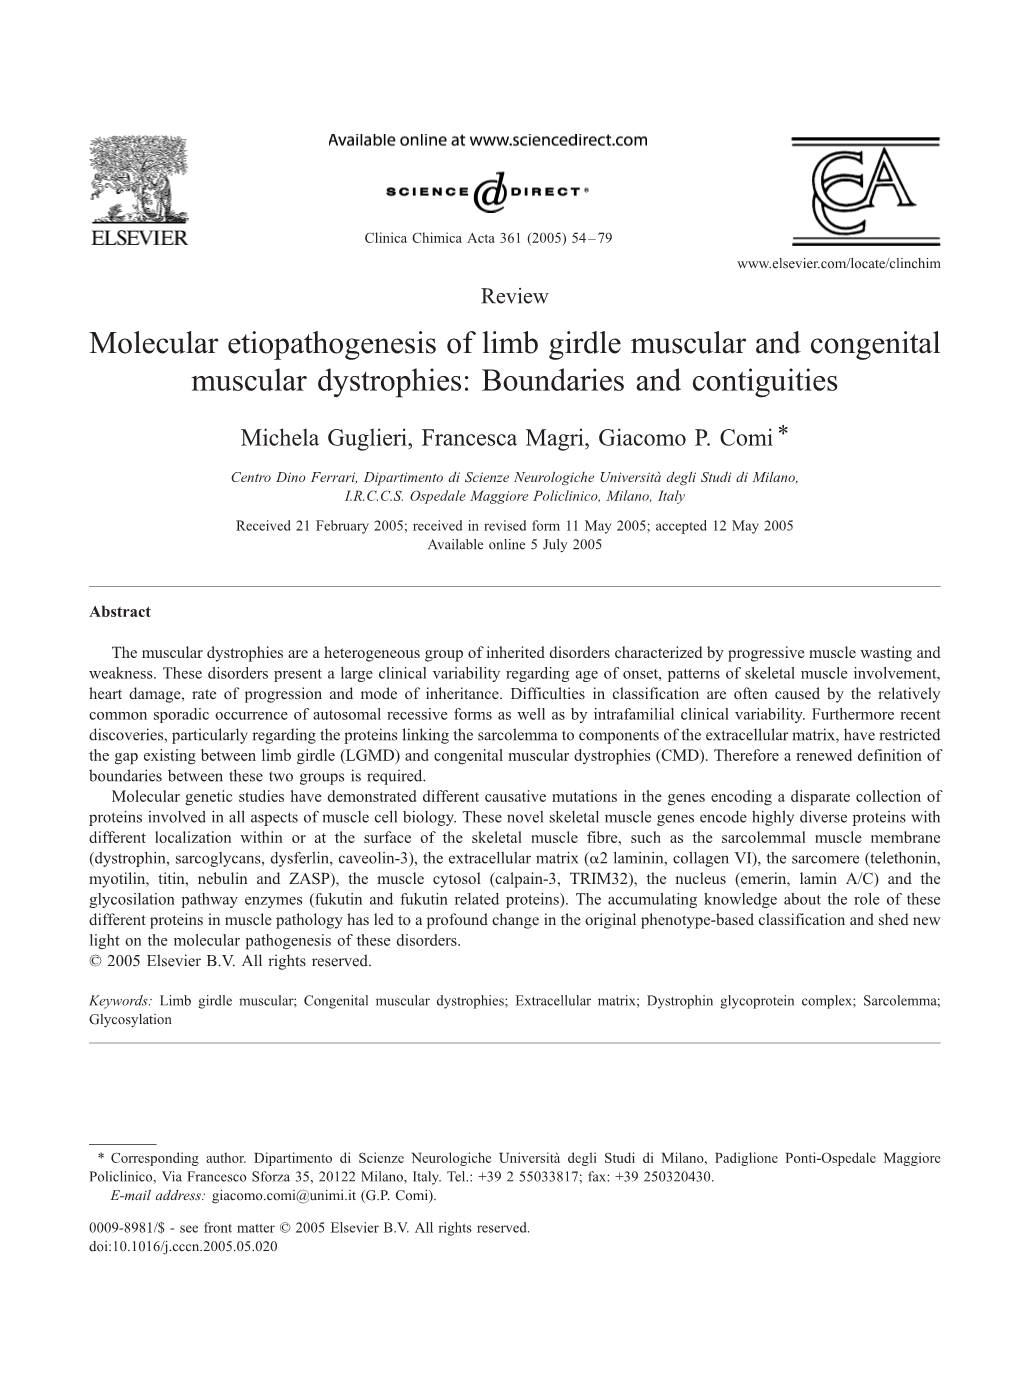 Molecular Etiopathogenesis of Limb Girdle Muscular and Congenital Muscular Dystrophies: Boundaries and Contiguities